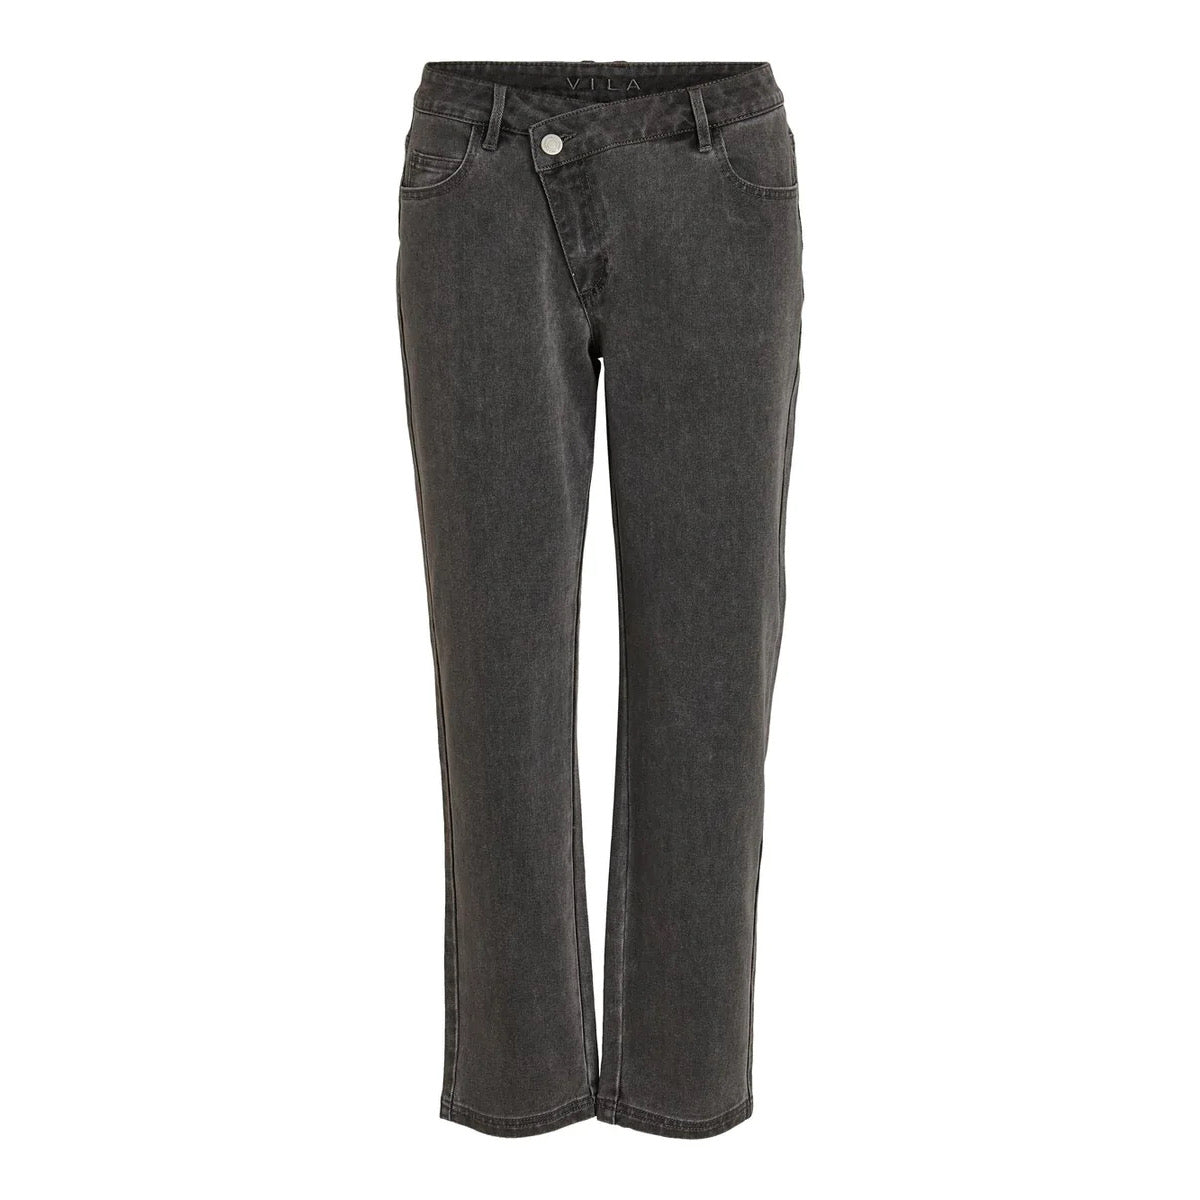 Vichio grey straight leg jeans